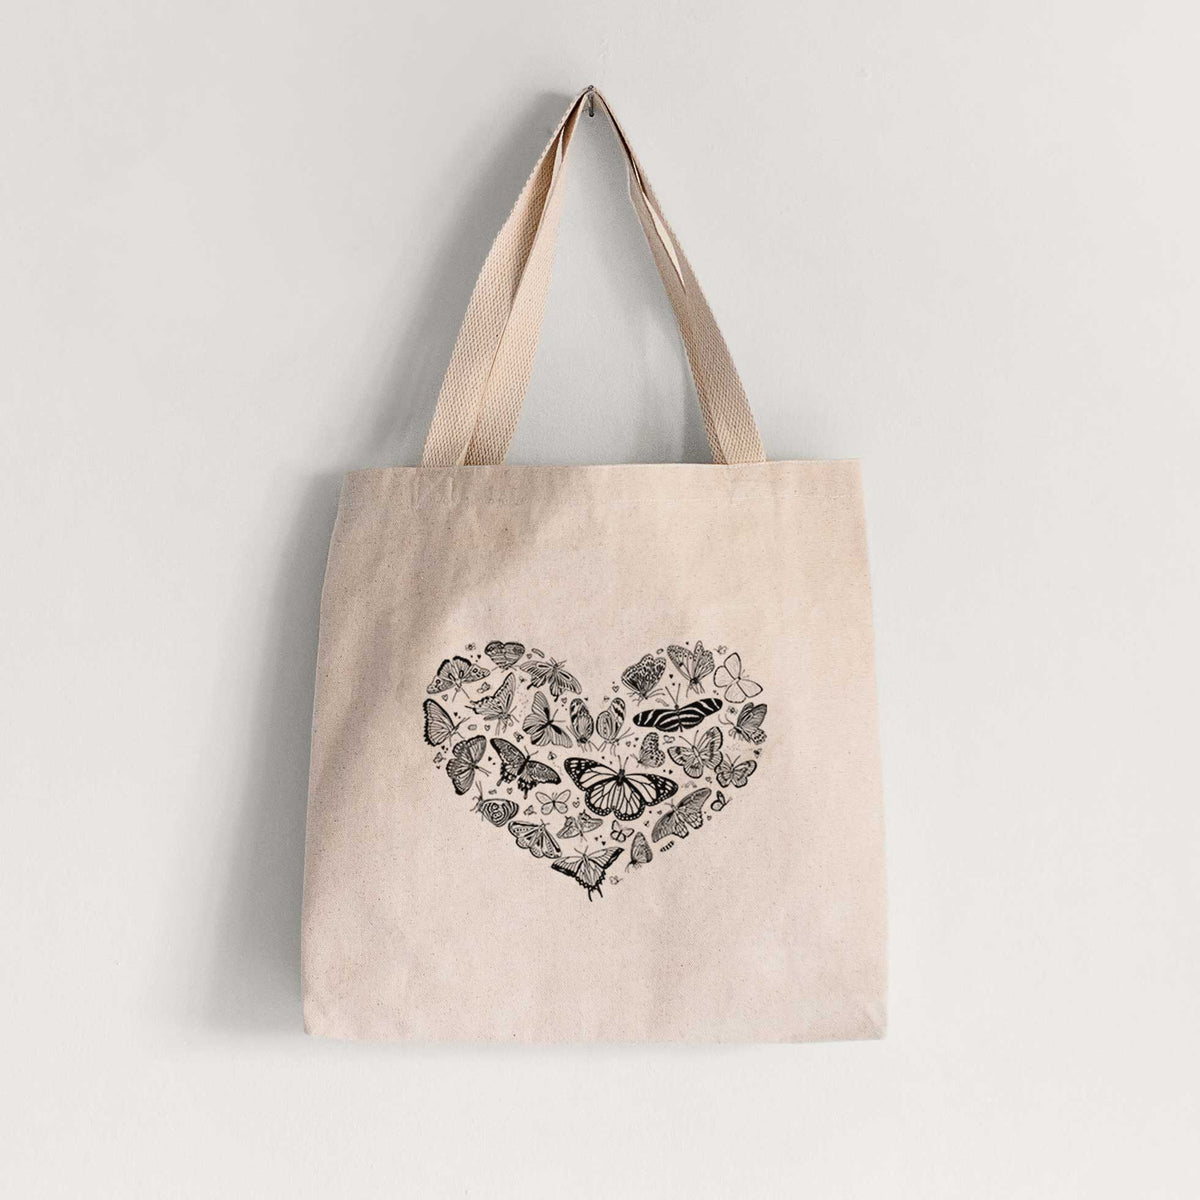 Heart Full of Butterflies - Tote Bag